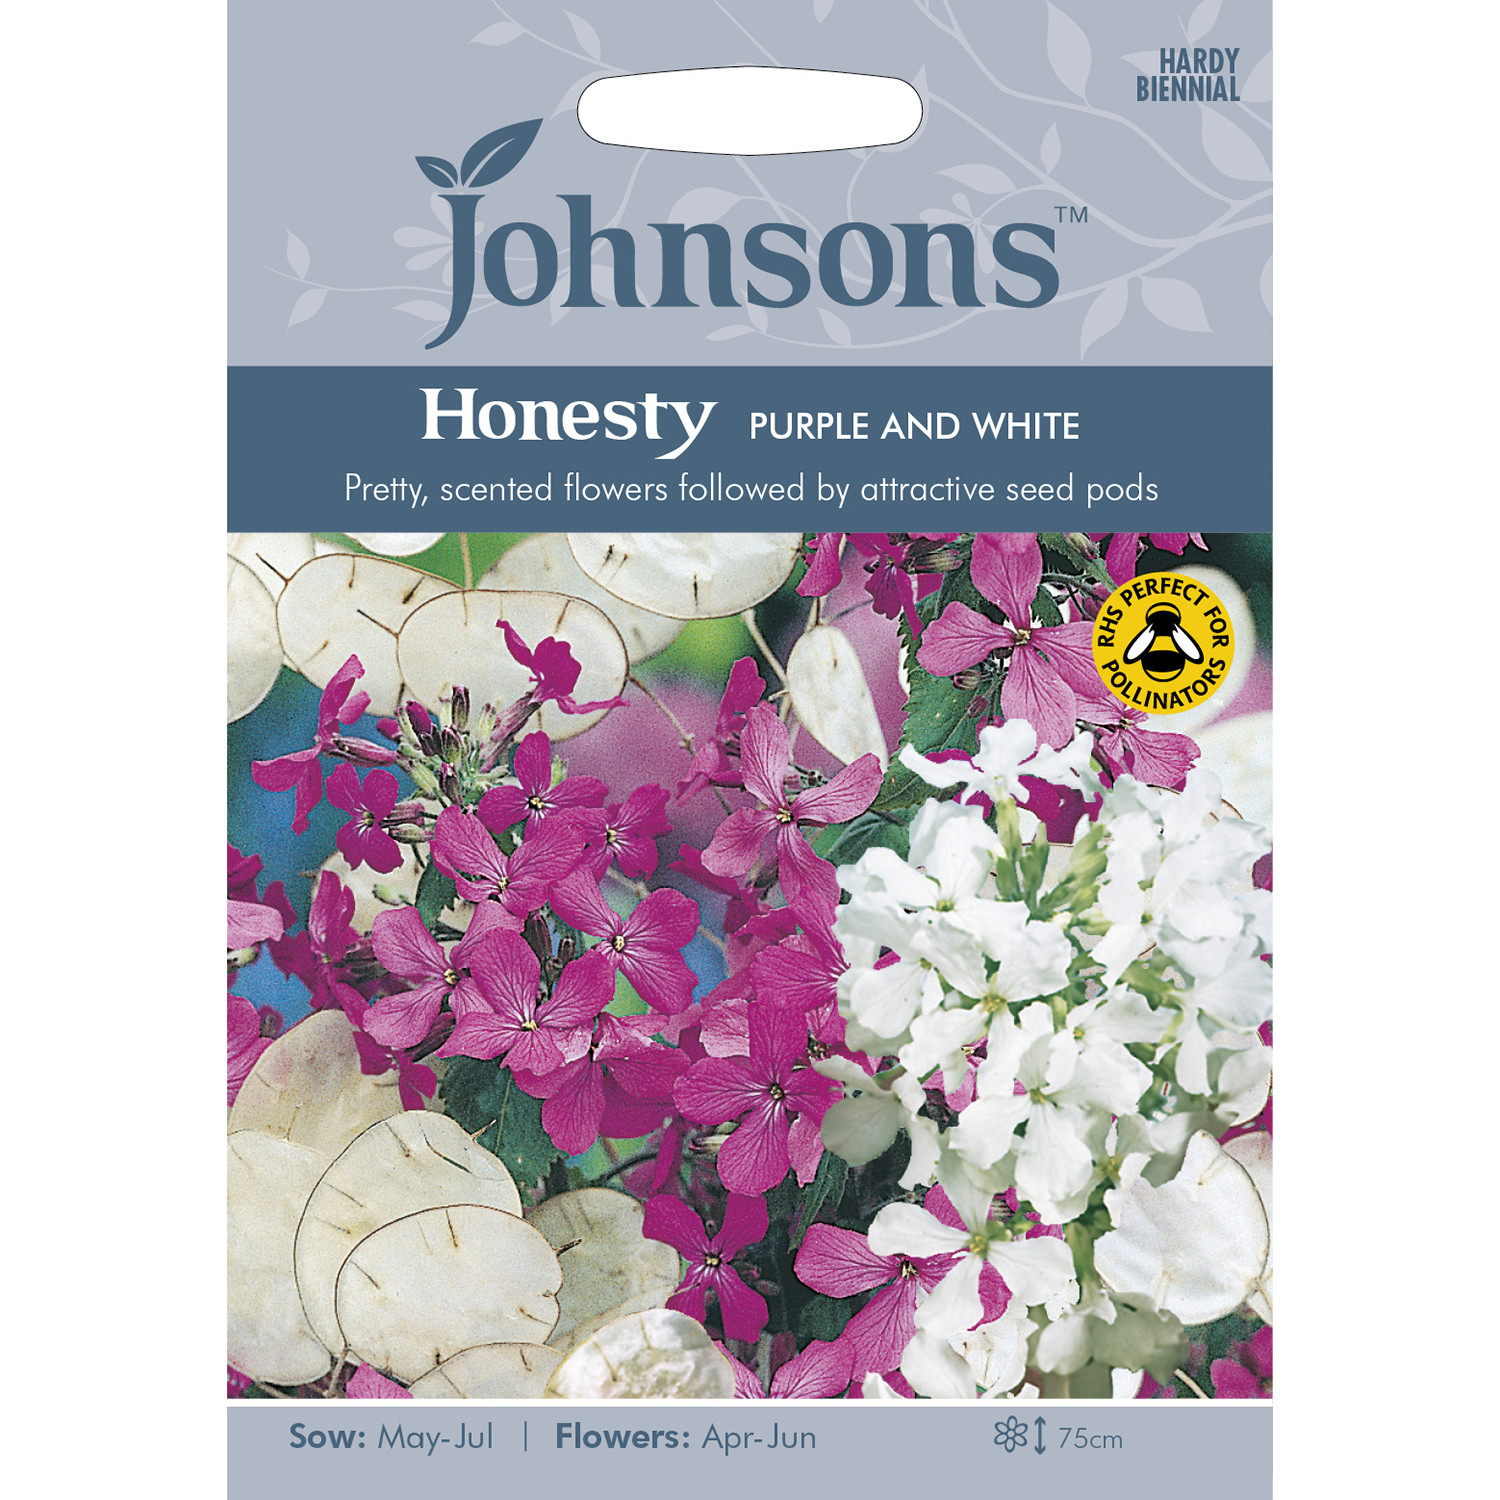 Johnsons Honesty Purple and White Flower Seeds Image 2